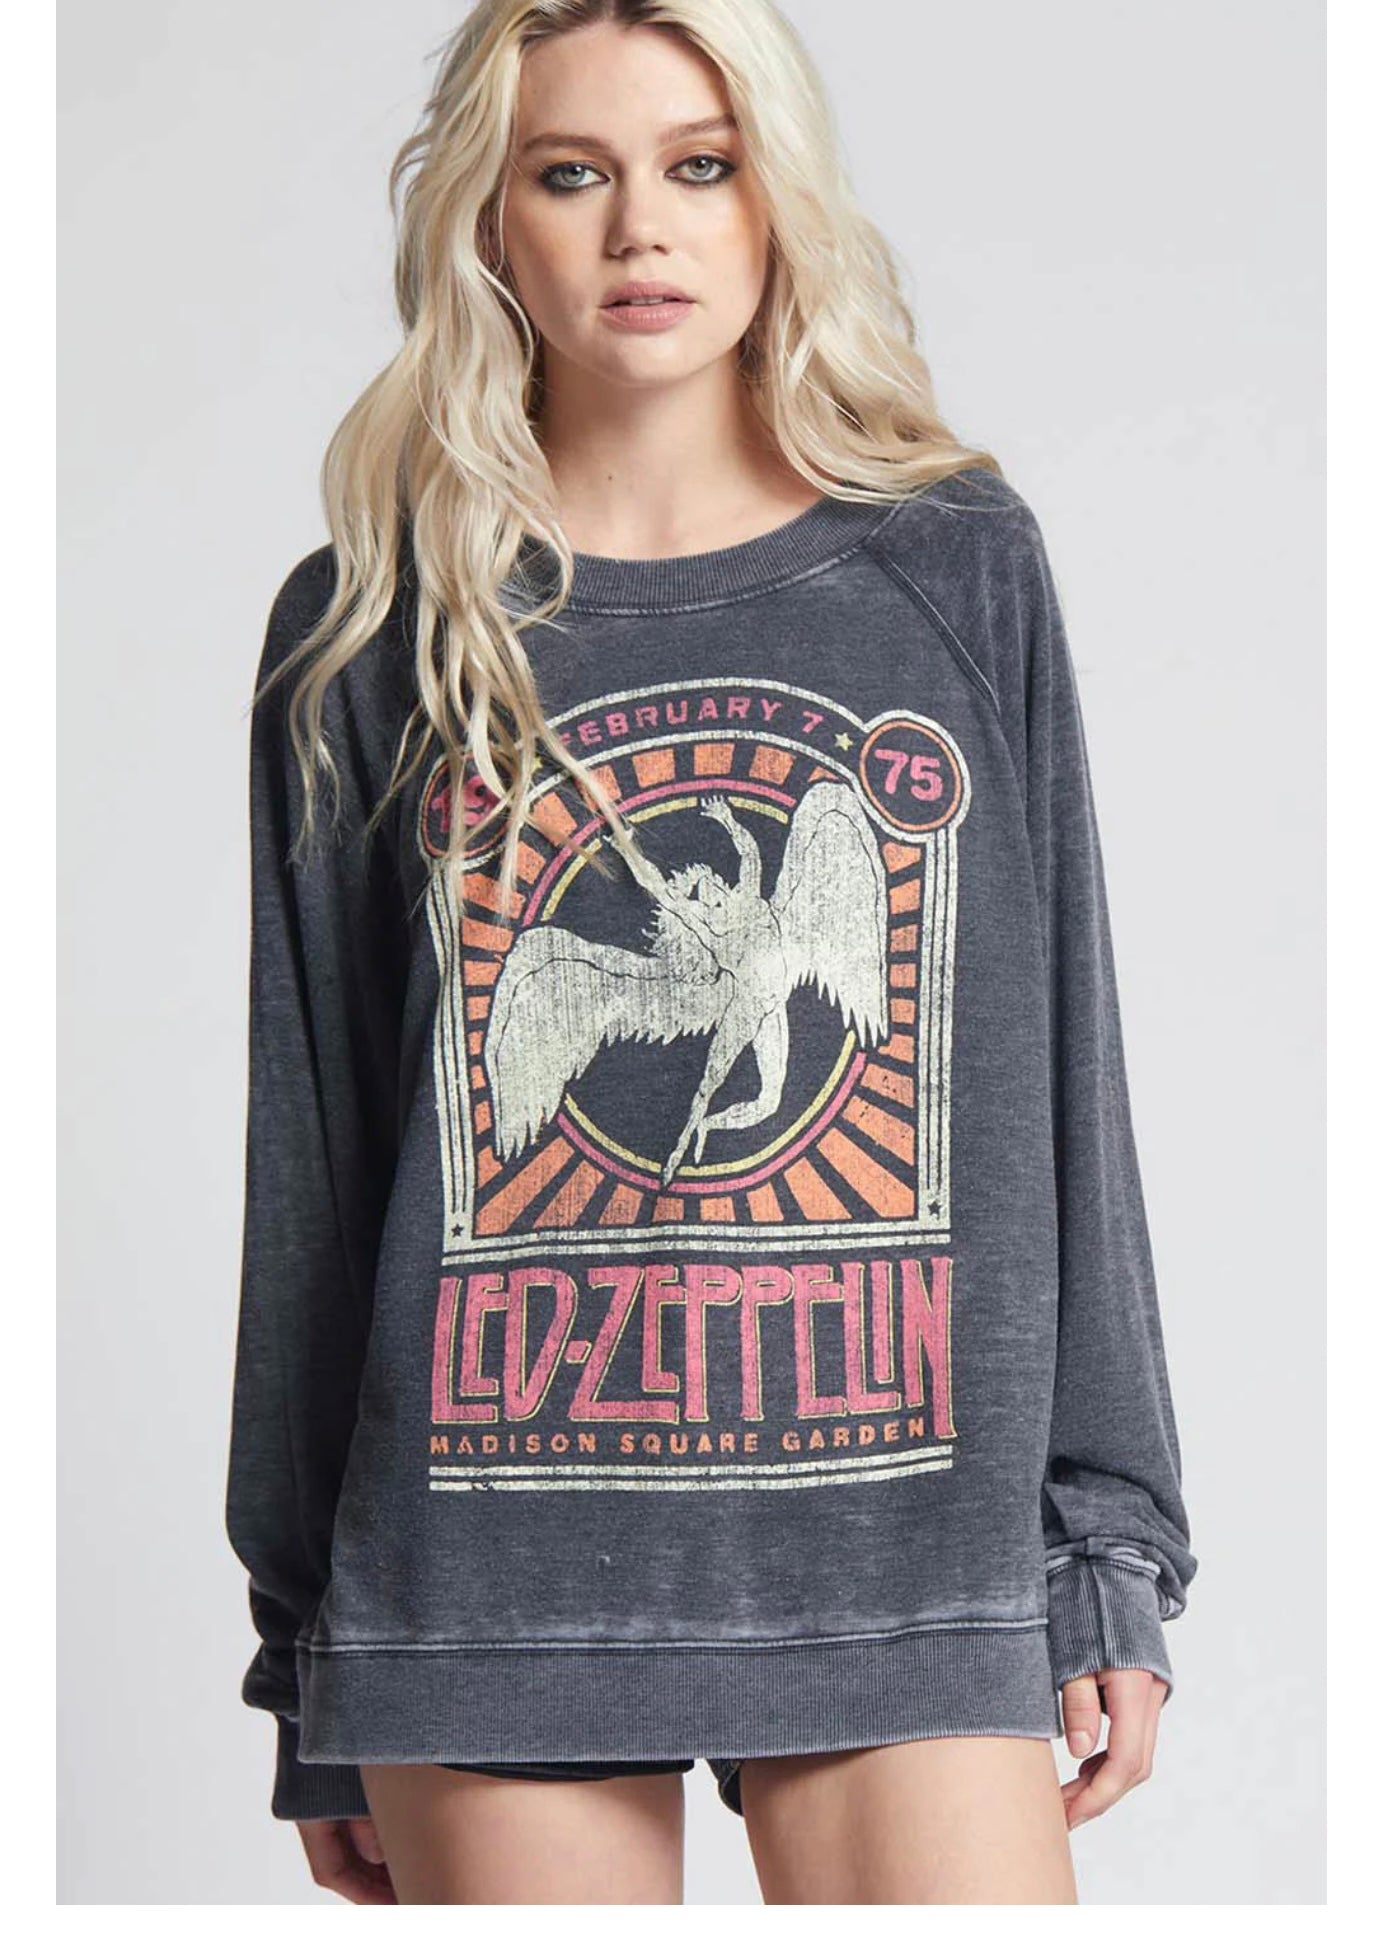 Led Zeppelin 1975 Sweatshirt by Recycled Karma at Dilaru Boutique Nutley NJ